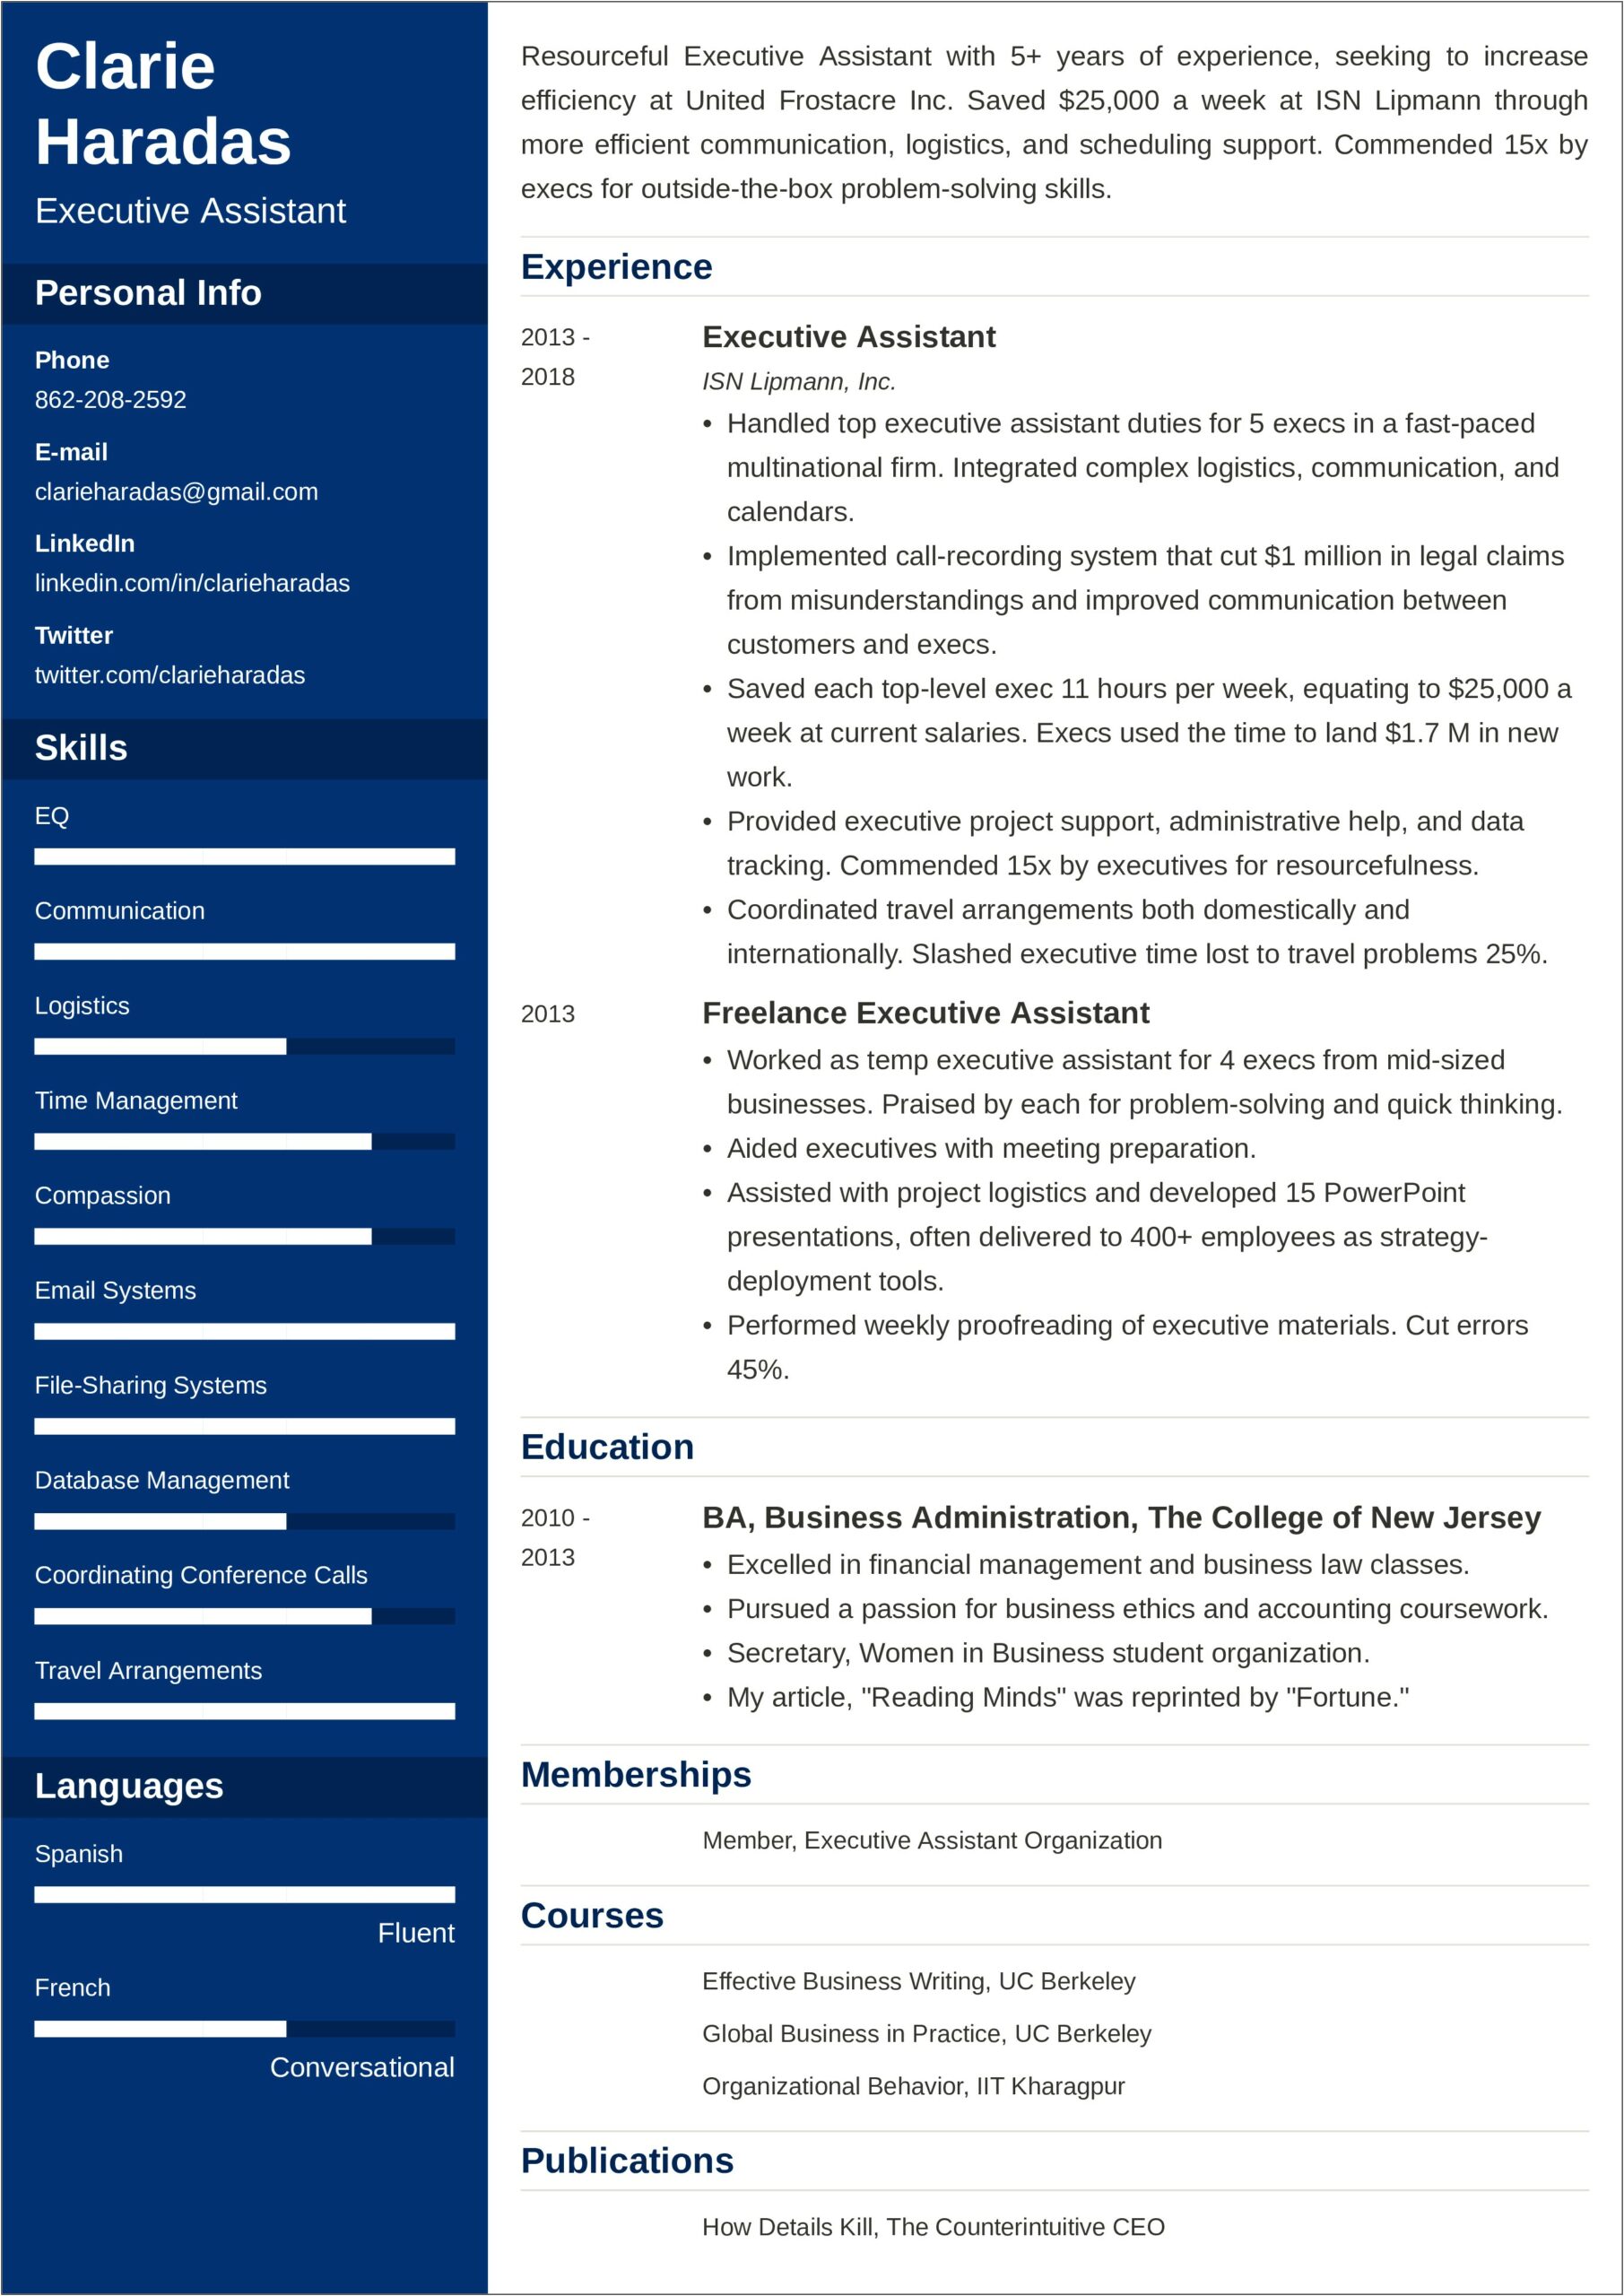 Sample Resume Profiles For Customer Service